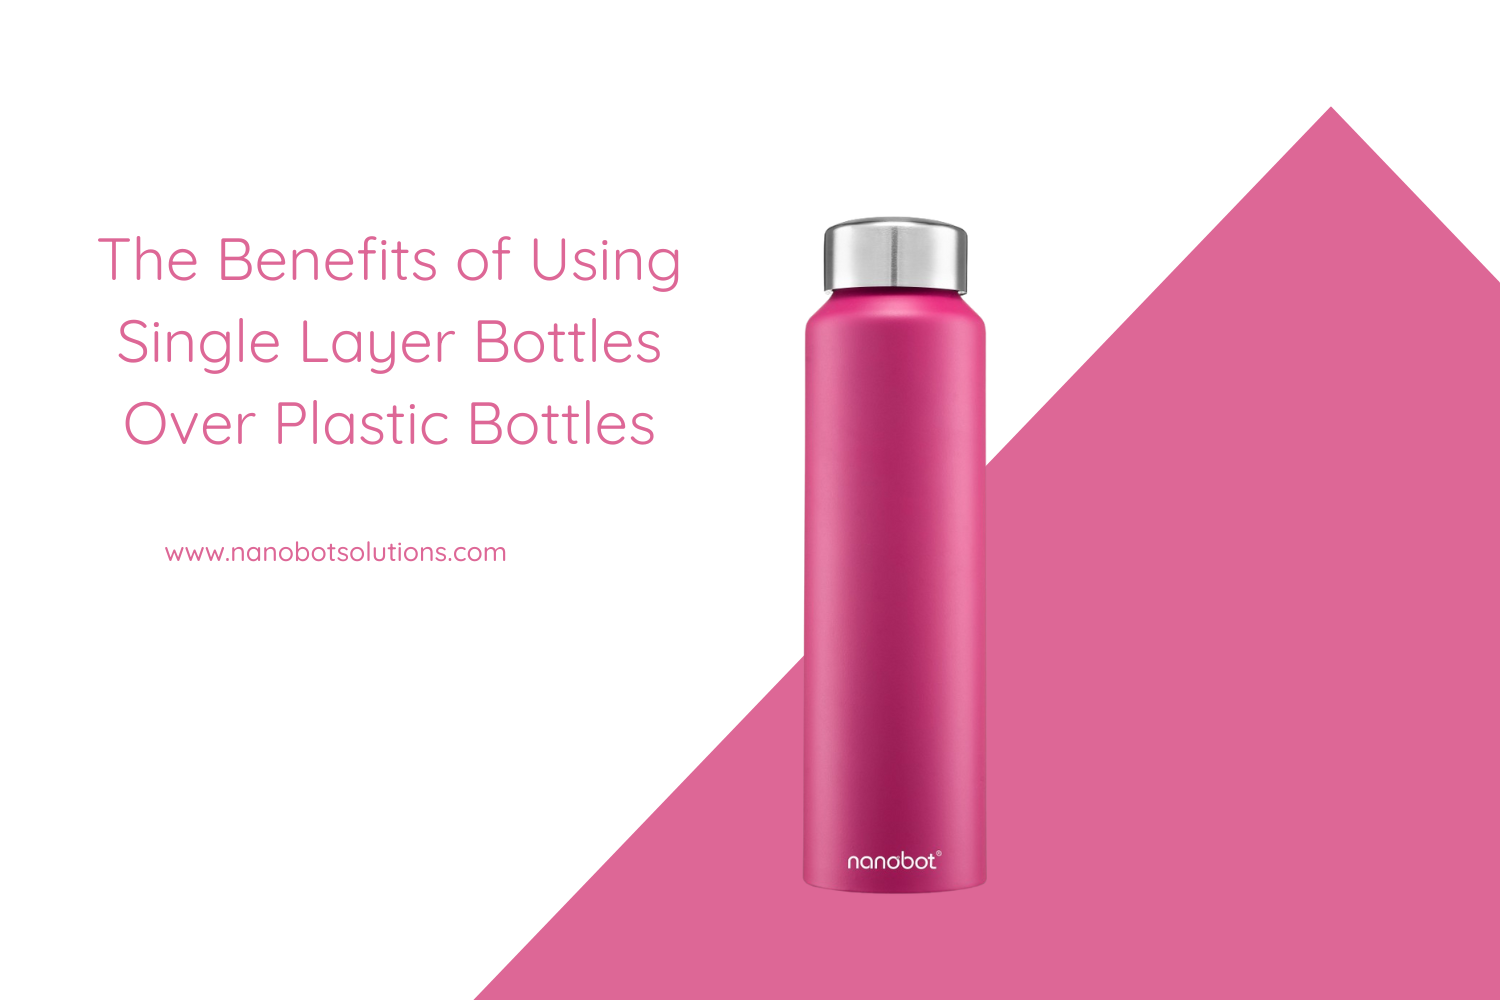 The Benefits of Using Single Layer Bottles Over Plastic Bottles